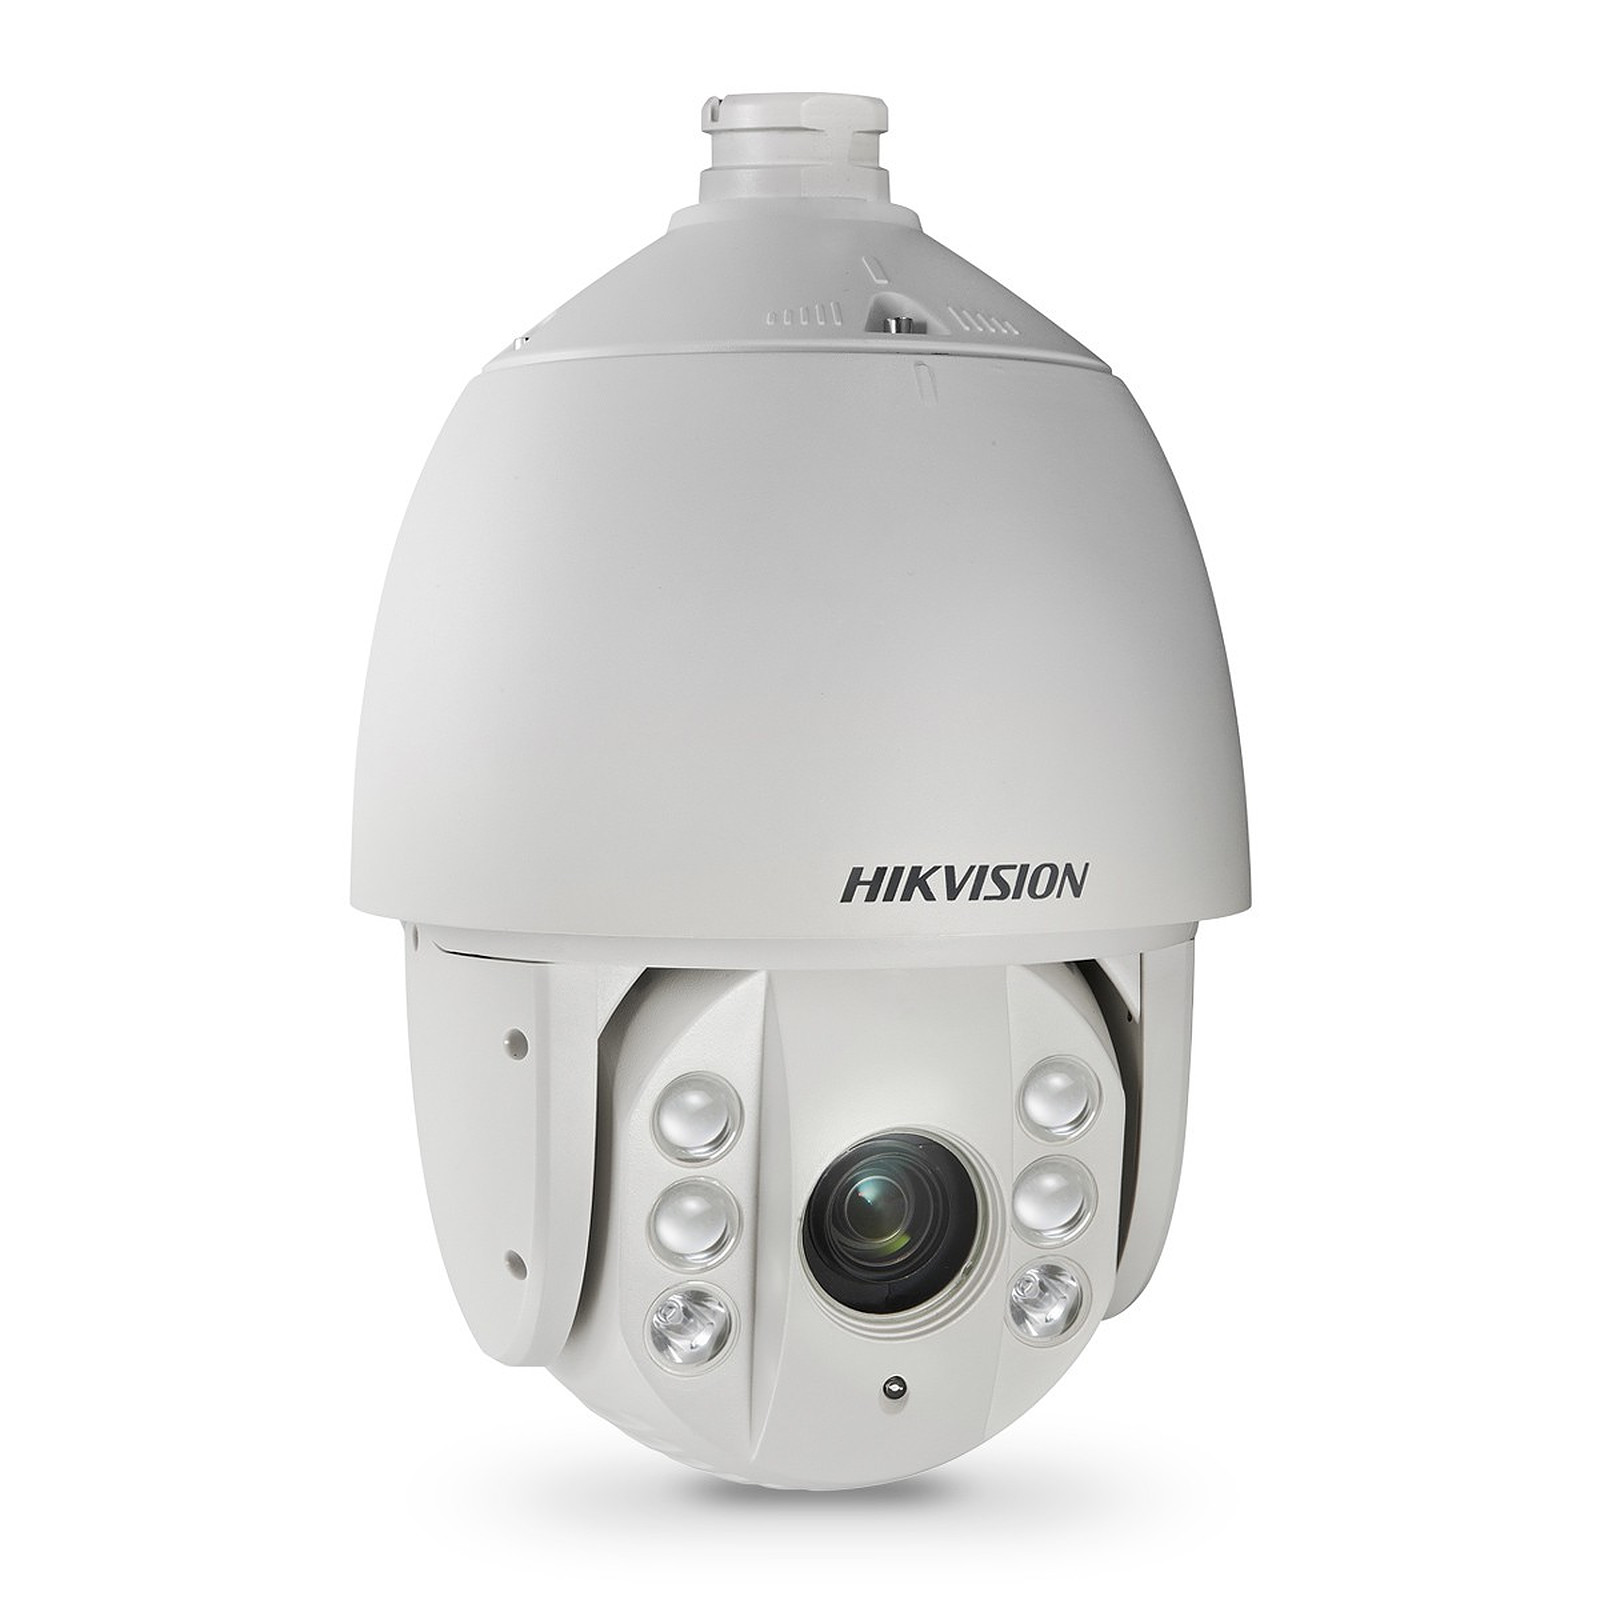 Hikvision - Camera dome PTZ Turbo HD IR 150m 1080P - Camera de surveillance Hikvision